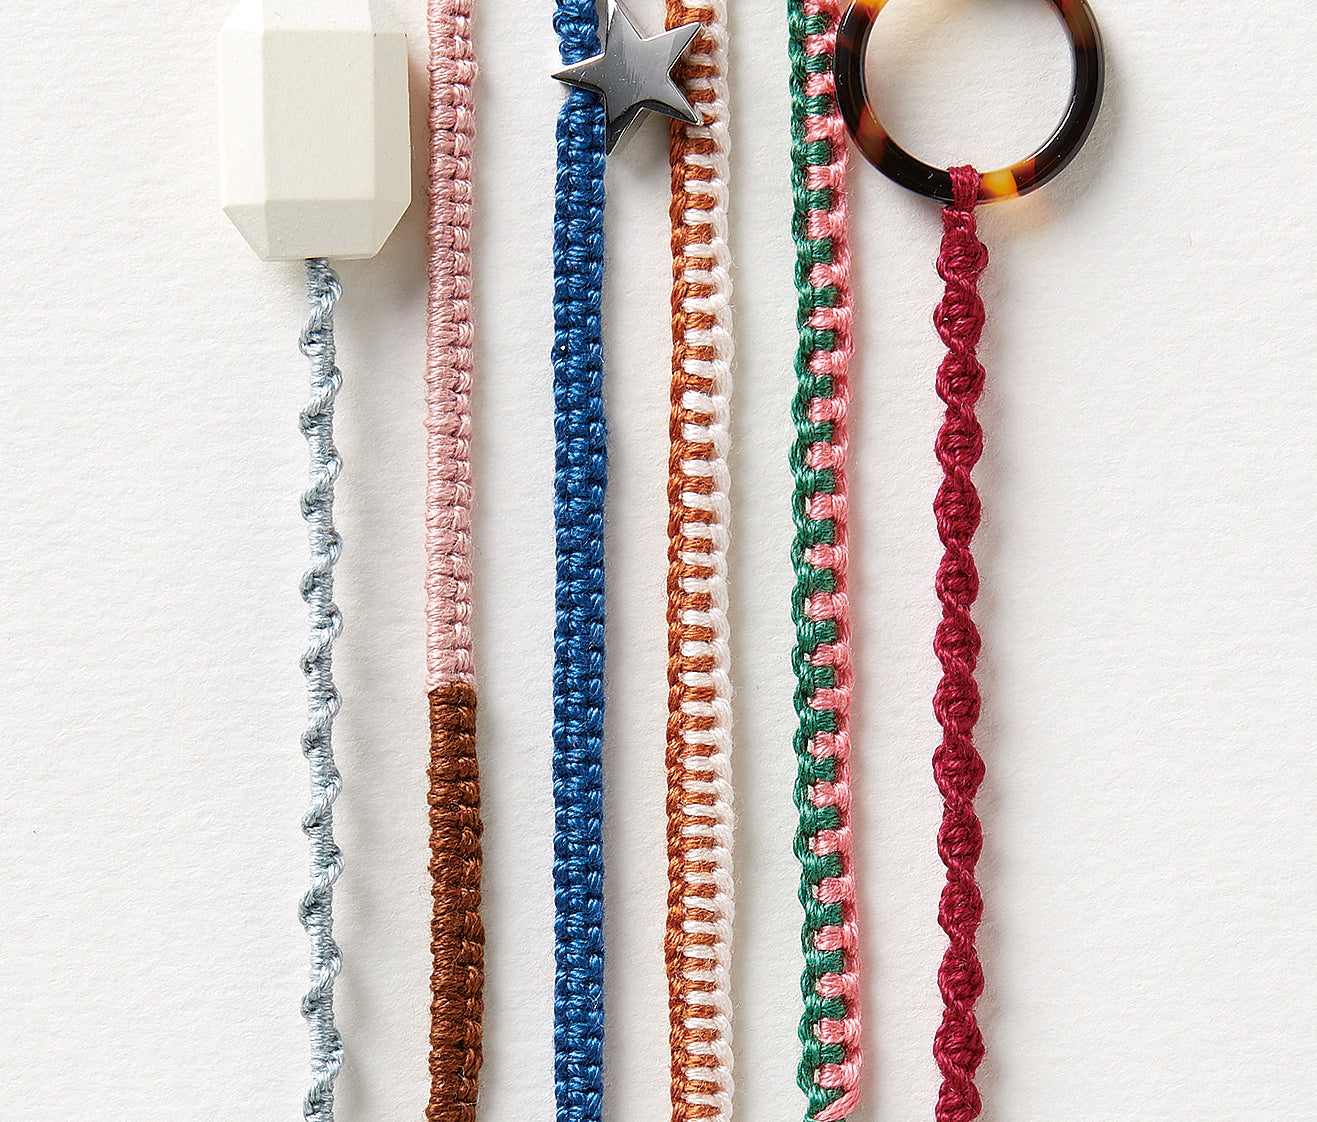 Loom Band Bracelet making kit and How to use | JK Arts 902 - YouTube